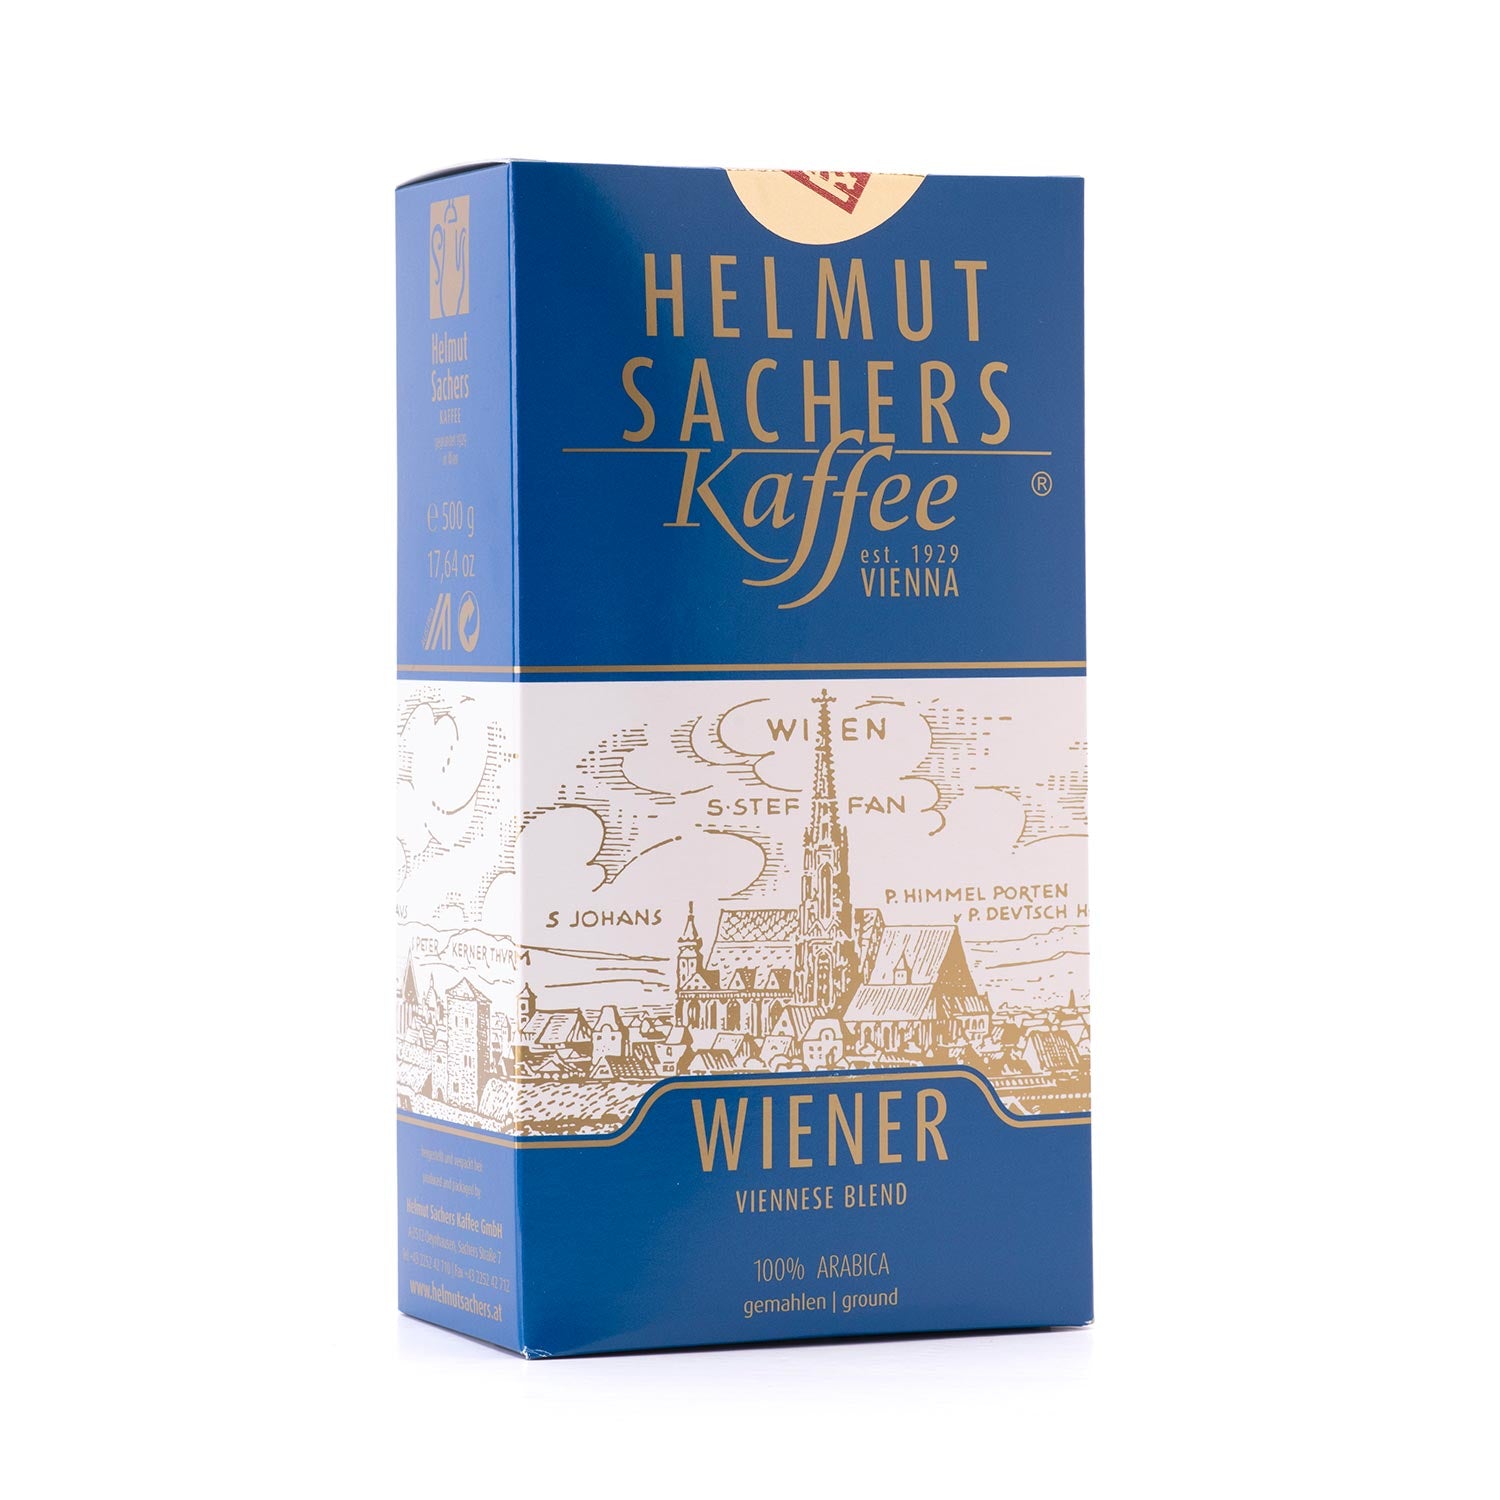 Coffee-Sacher-Wiener-Blend-500g-web_a07506a2-cf1b-4e31-8b7a-6c64d68ffb02.jpg